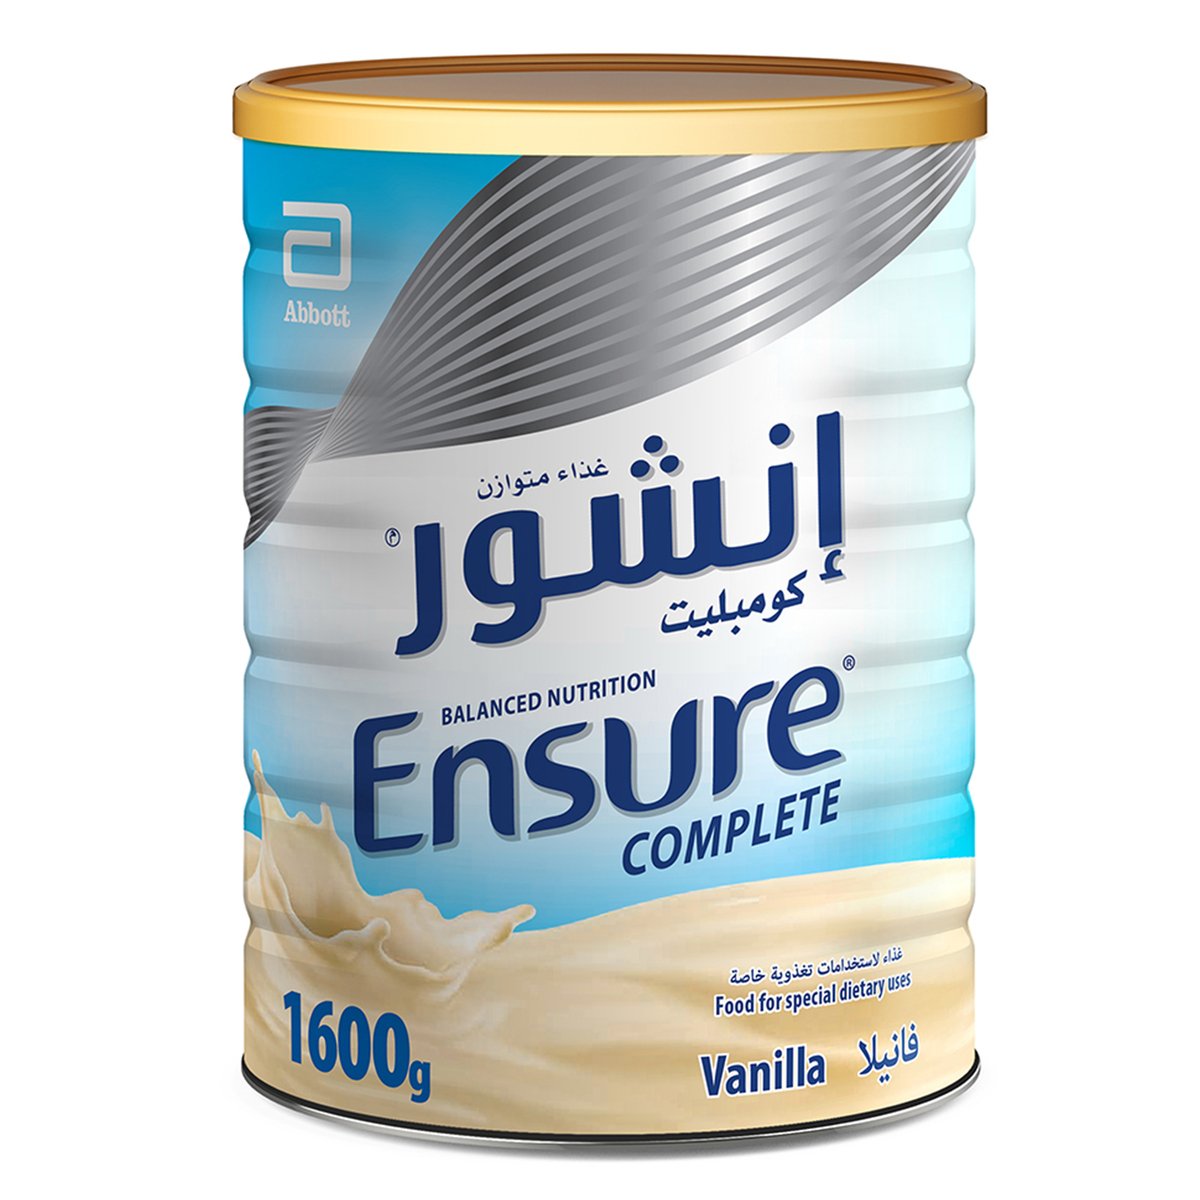 Ensure Complete Balanced Nutrition Milk Powder With Vanilla Flavour 1.6 kg  price in Dubai, UAE